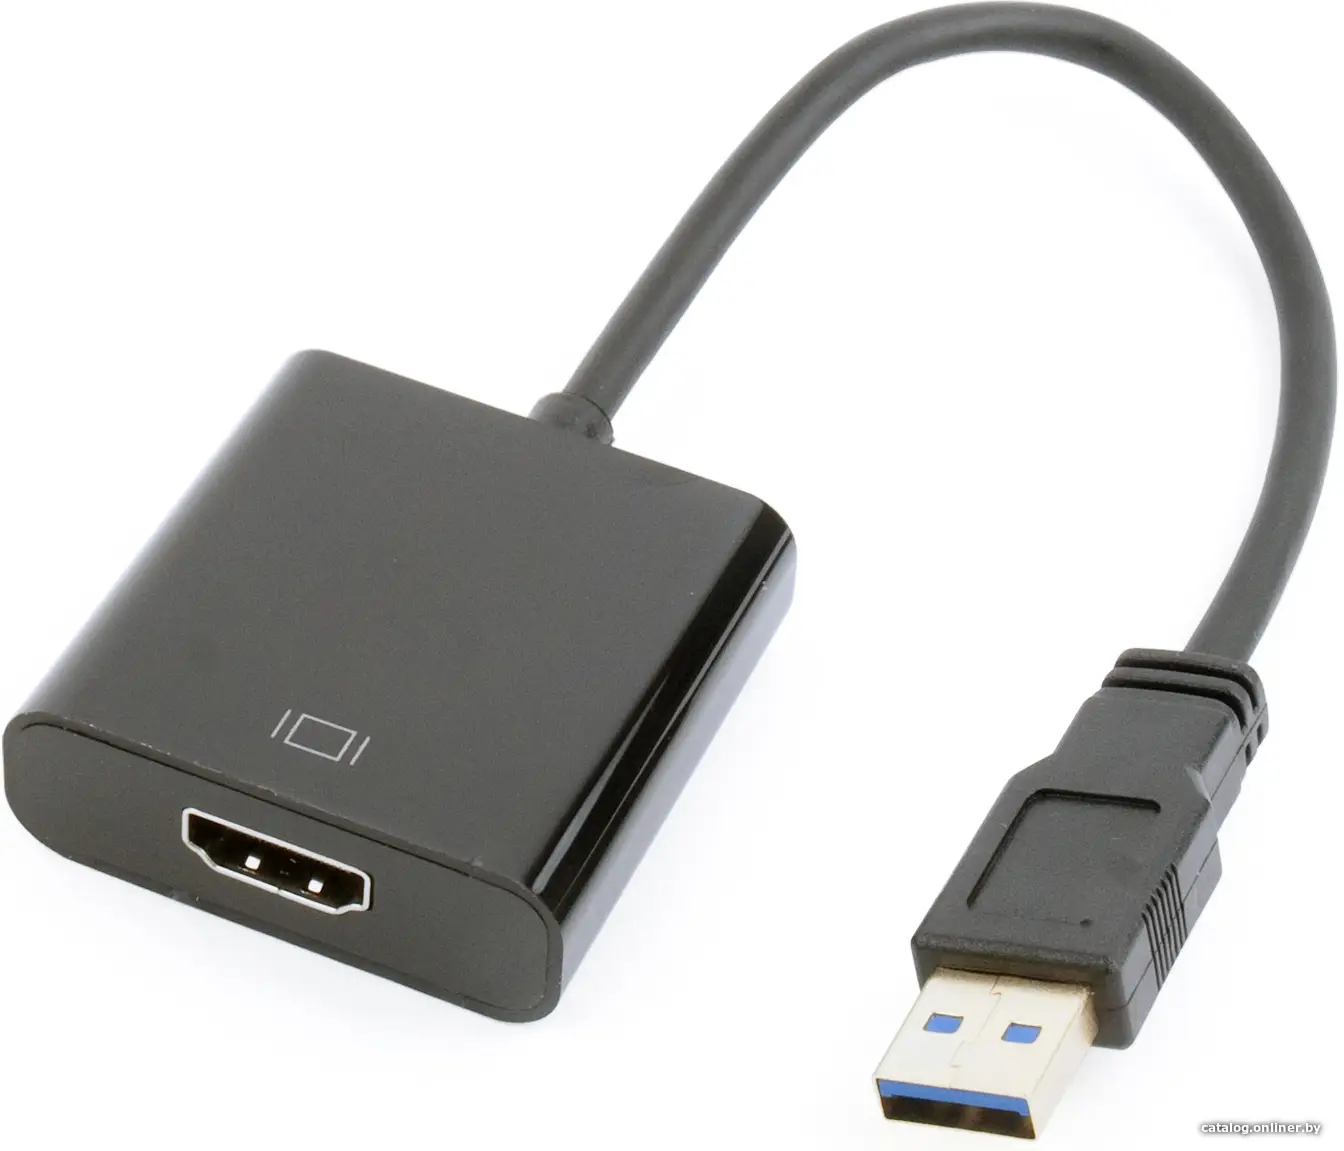 Адаптер Cablexpert A-USB3-HDMI-02